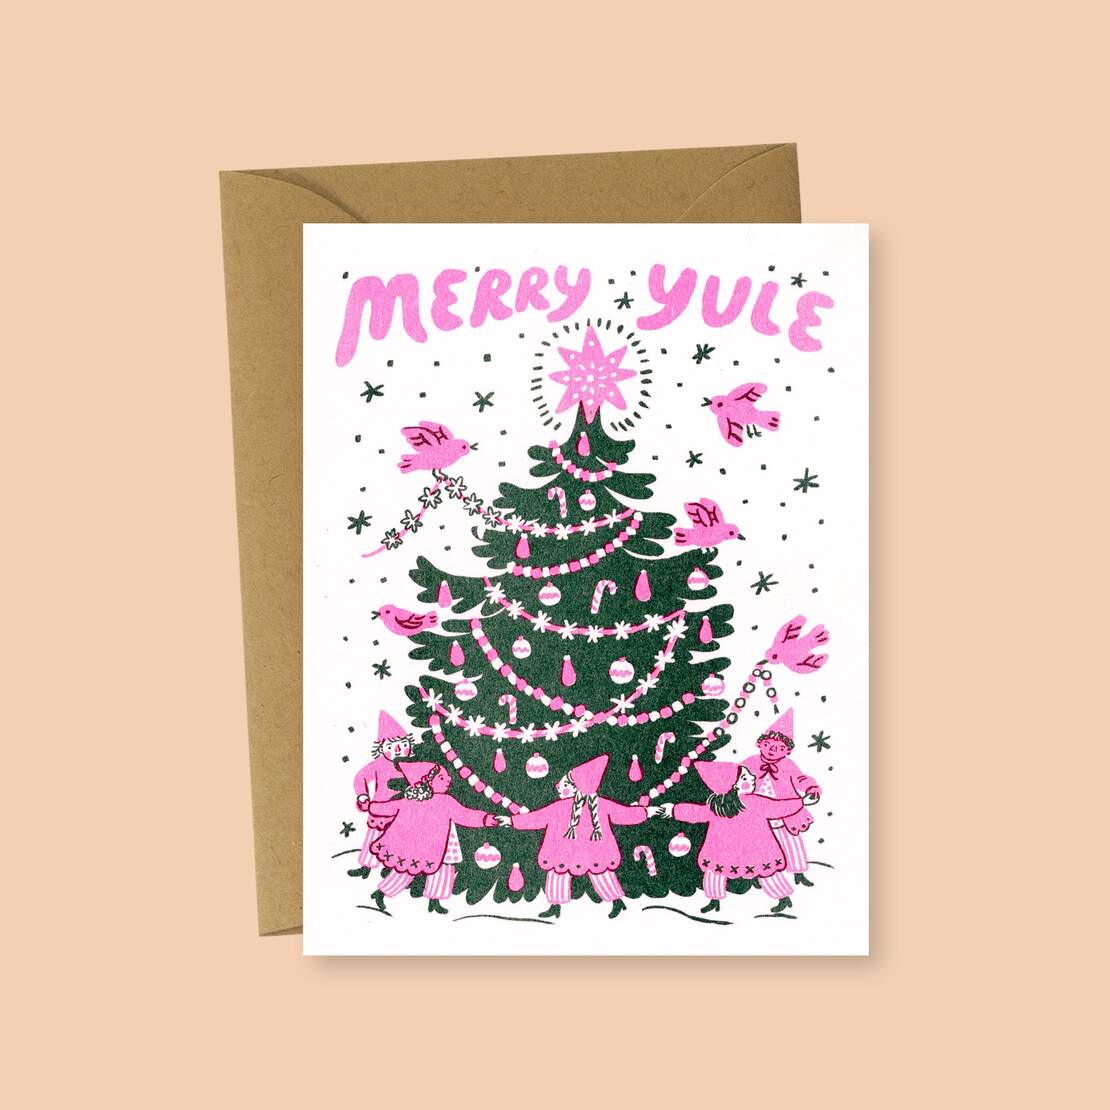 Merry Yule Greeting Card